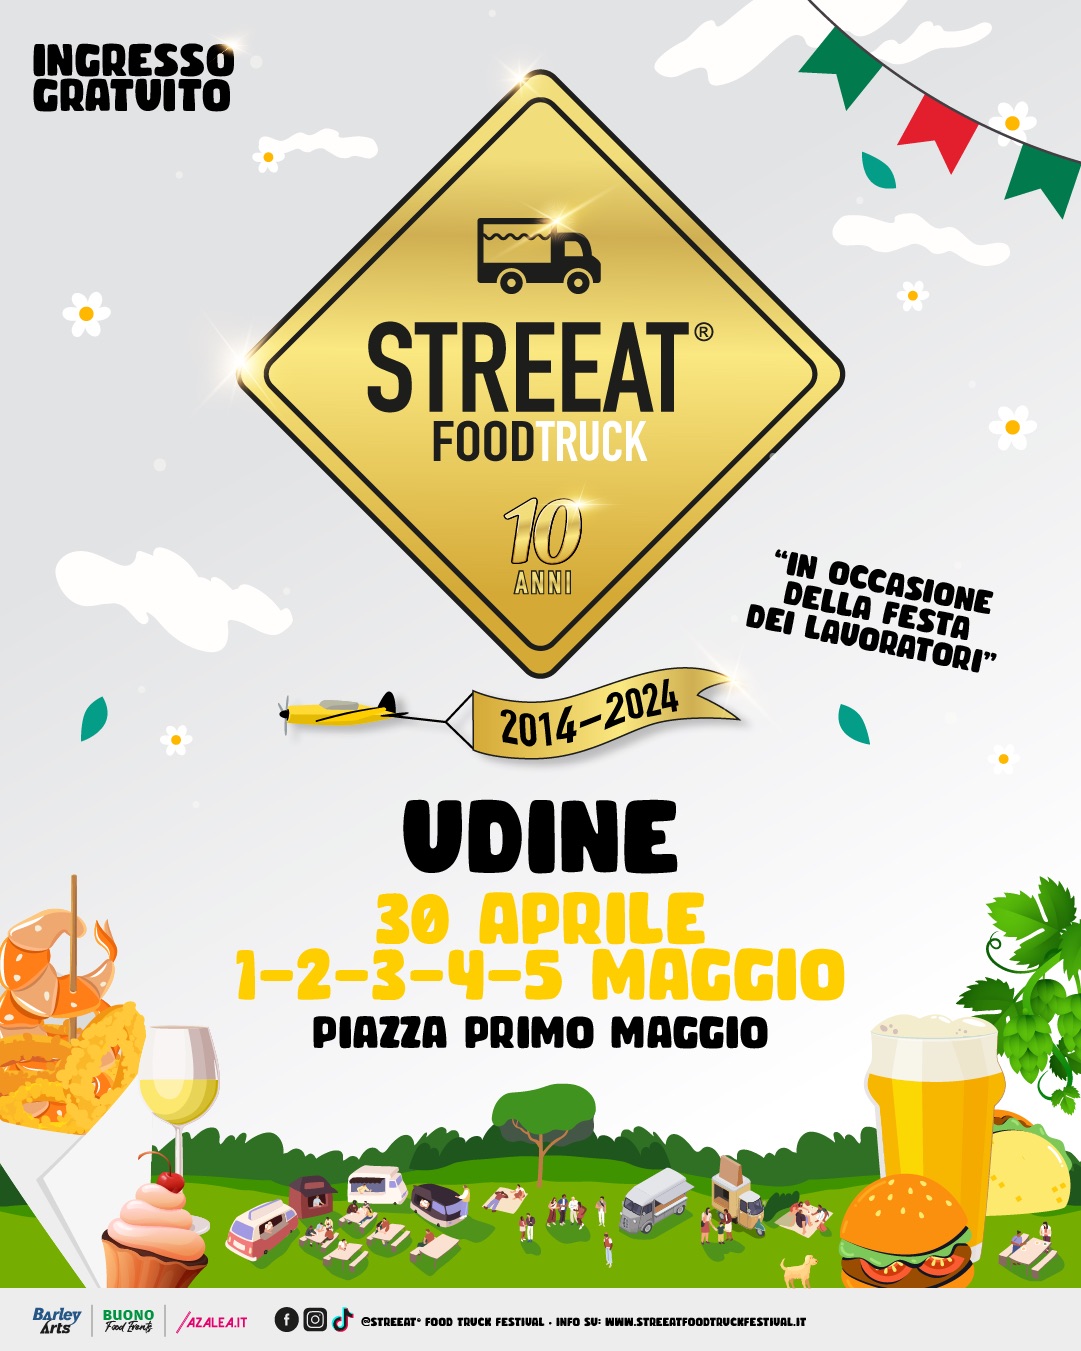 STREEAT®, Food Truck Festival, UDINE